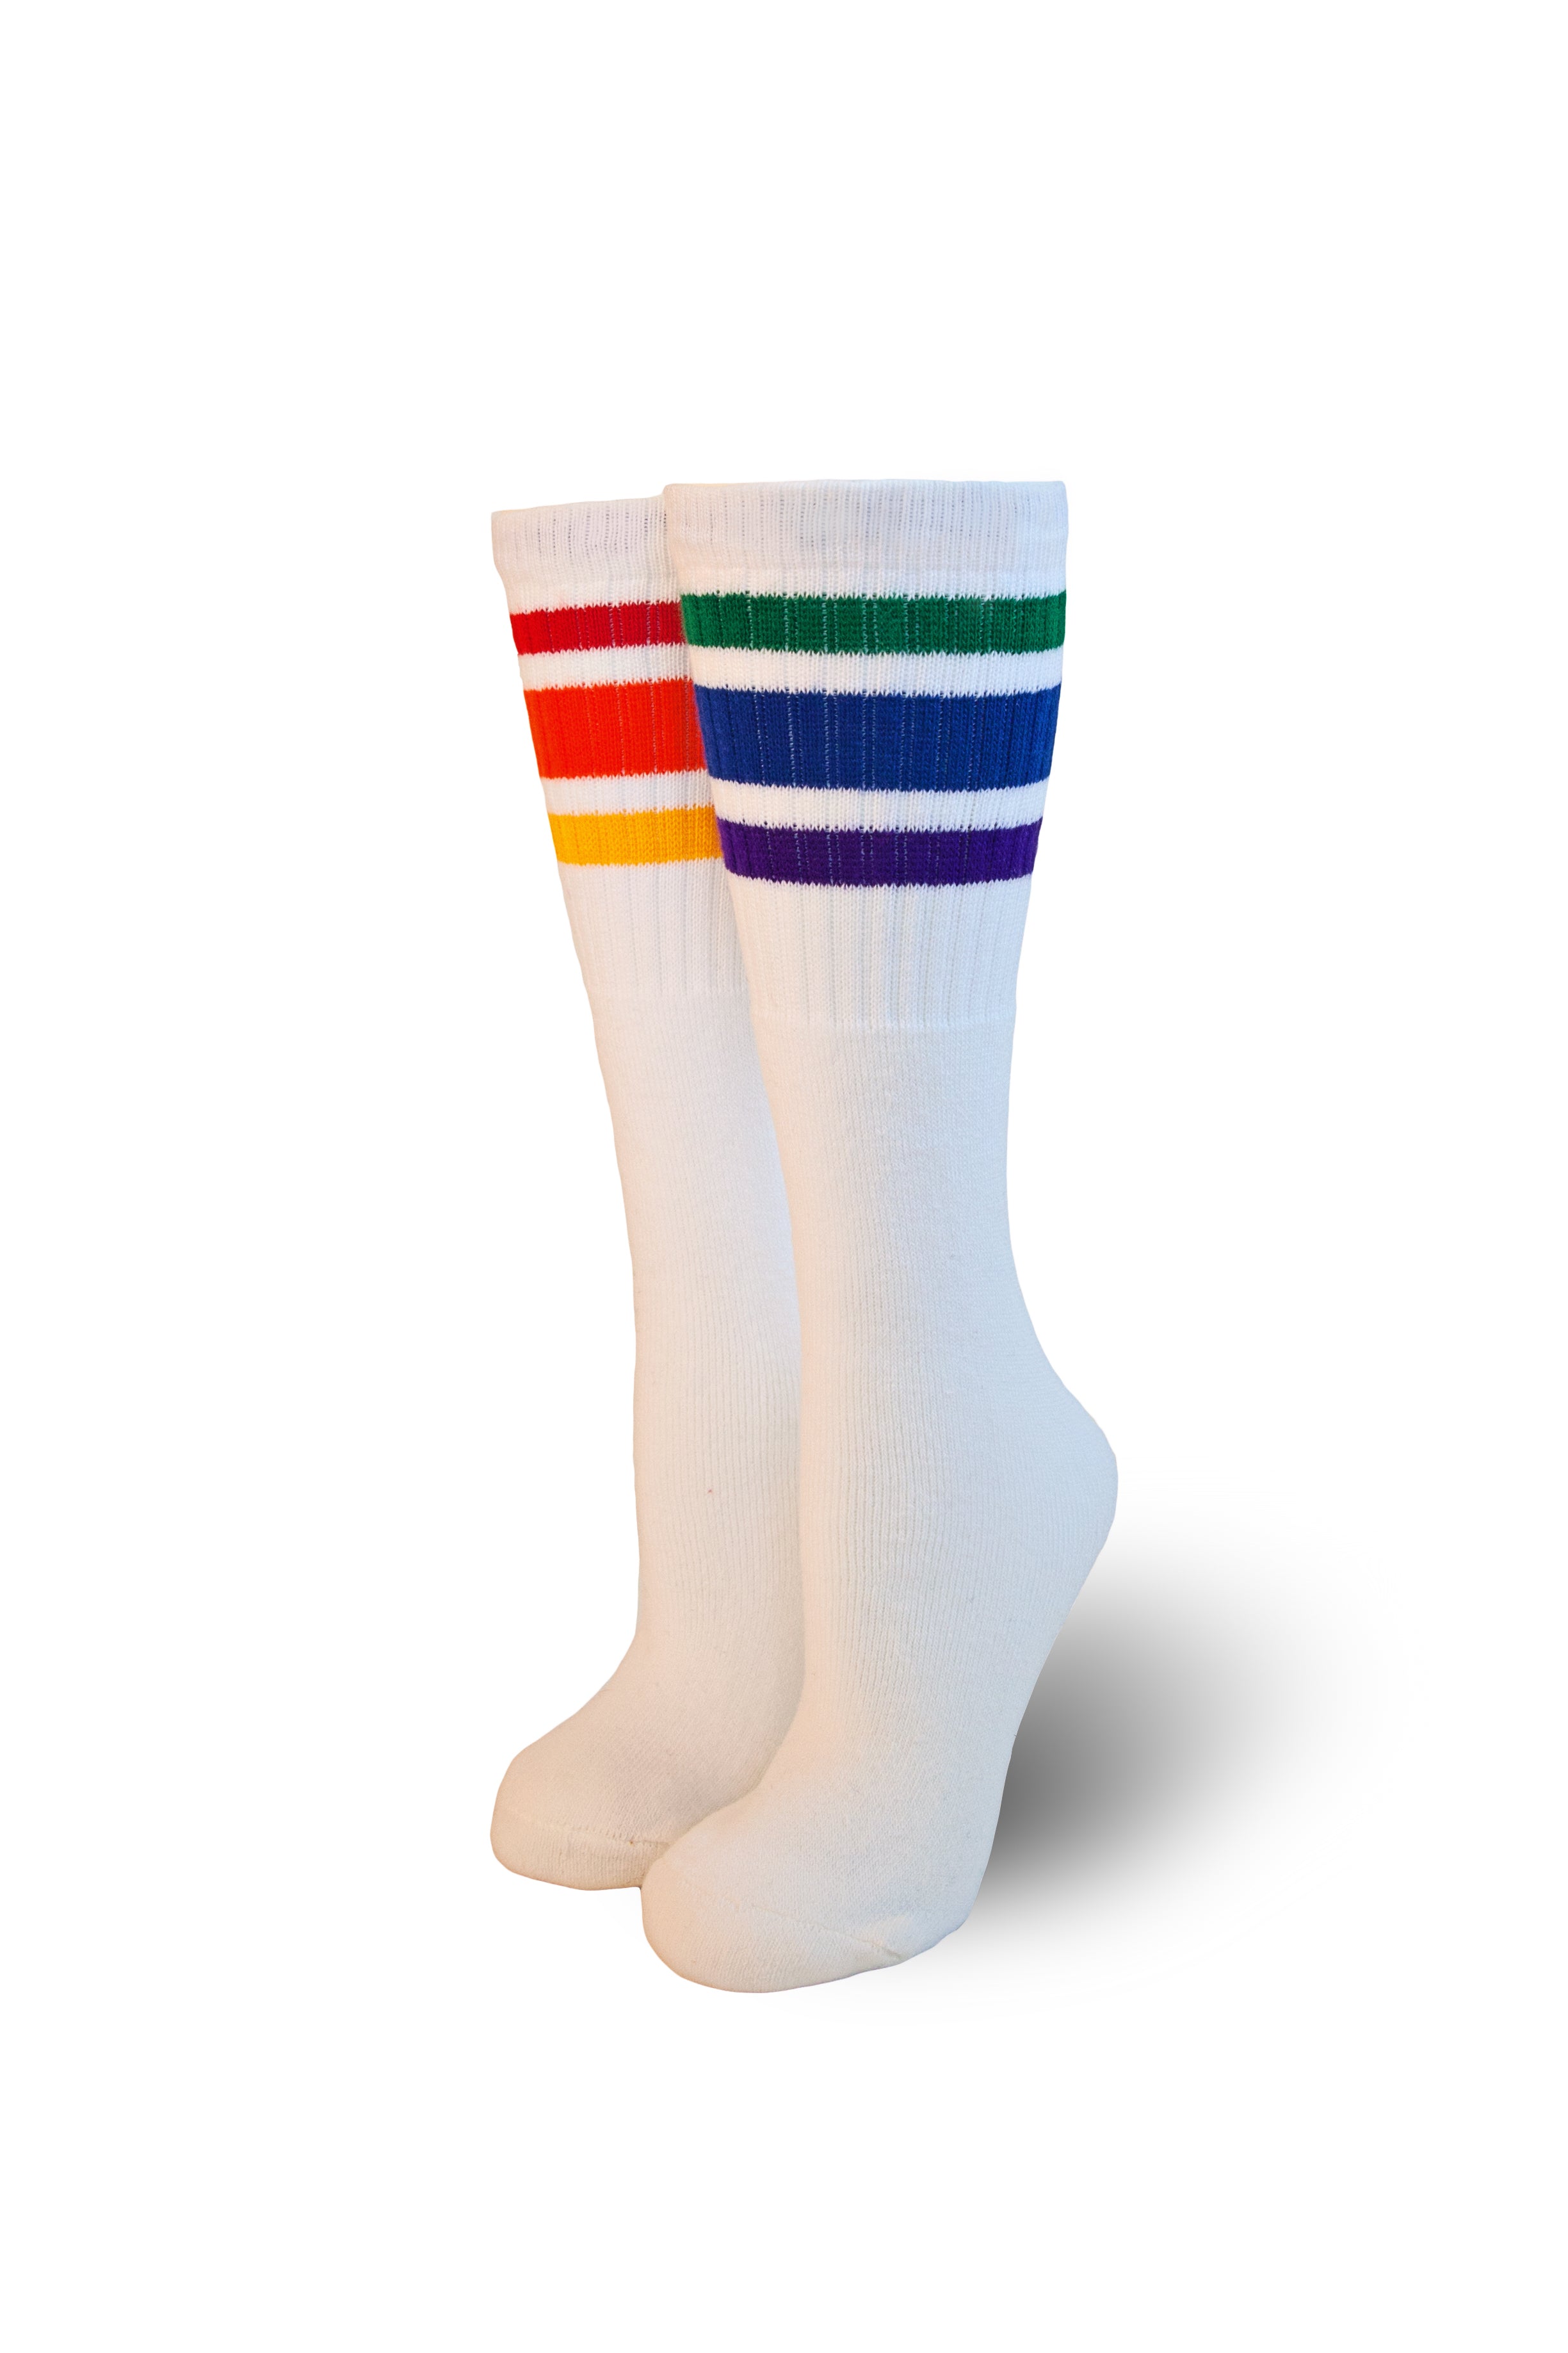 Pride Socks 14in white tubes - Courage